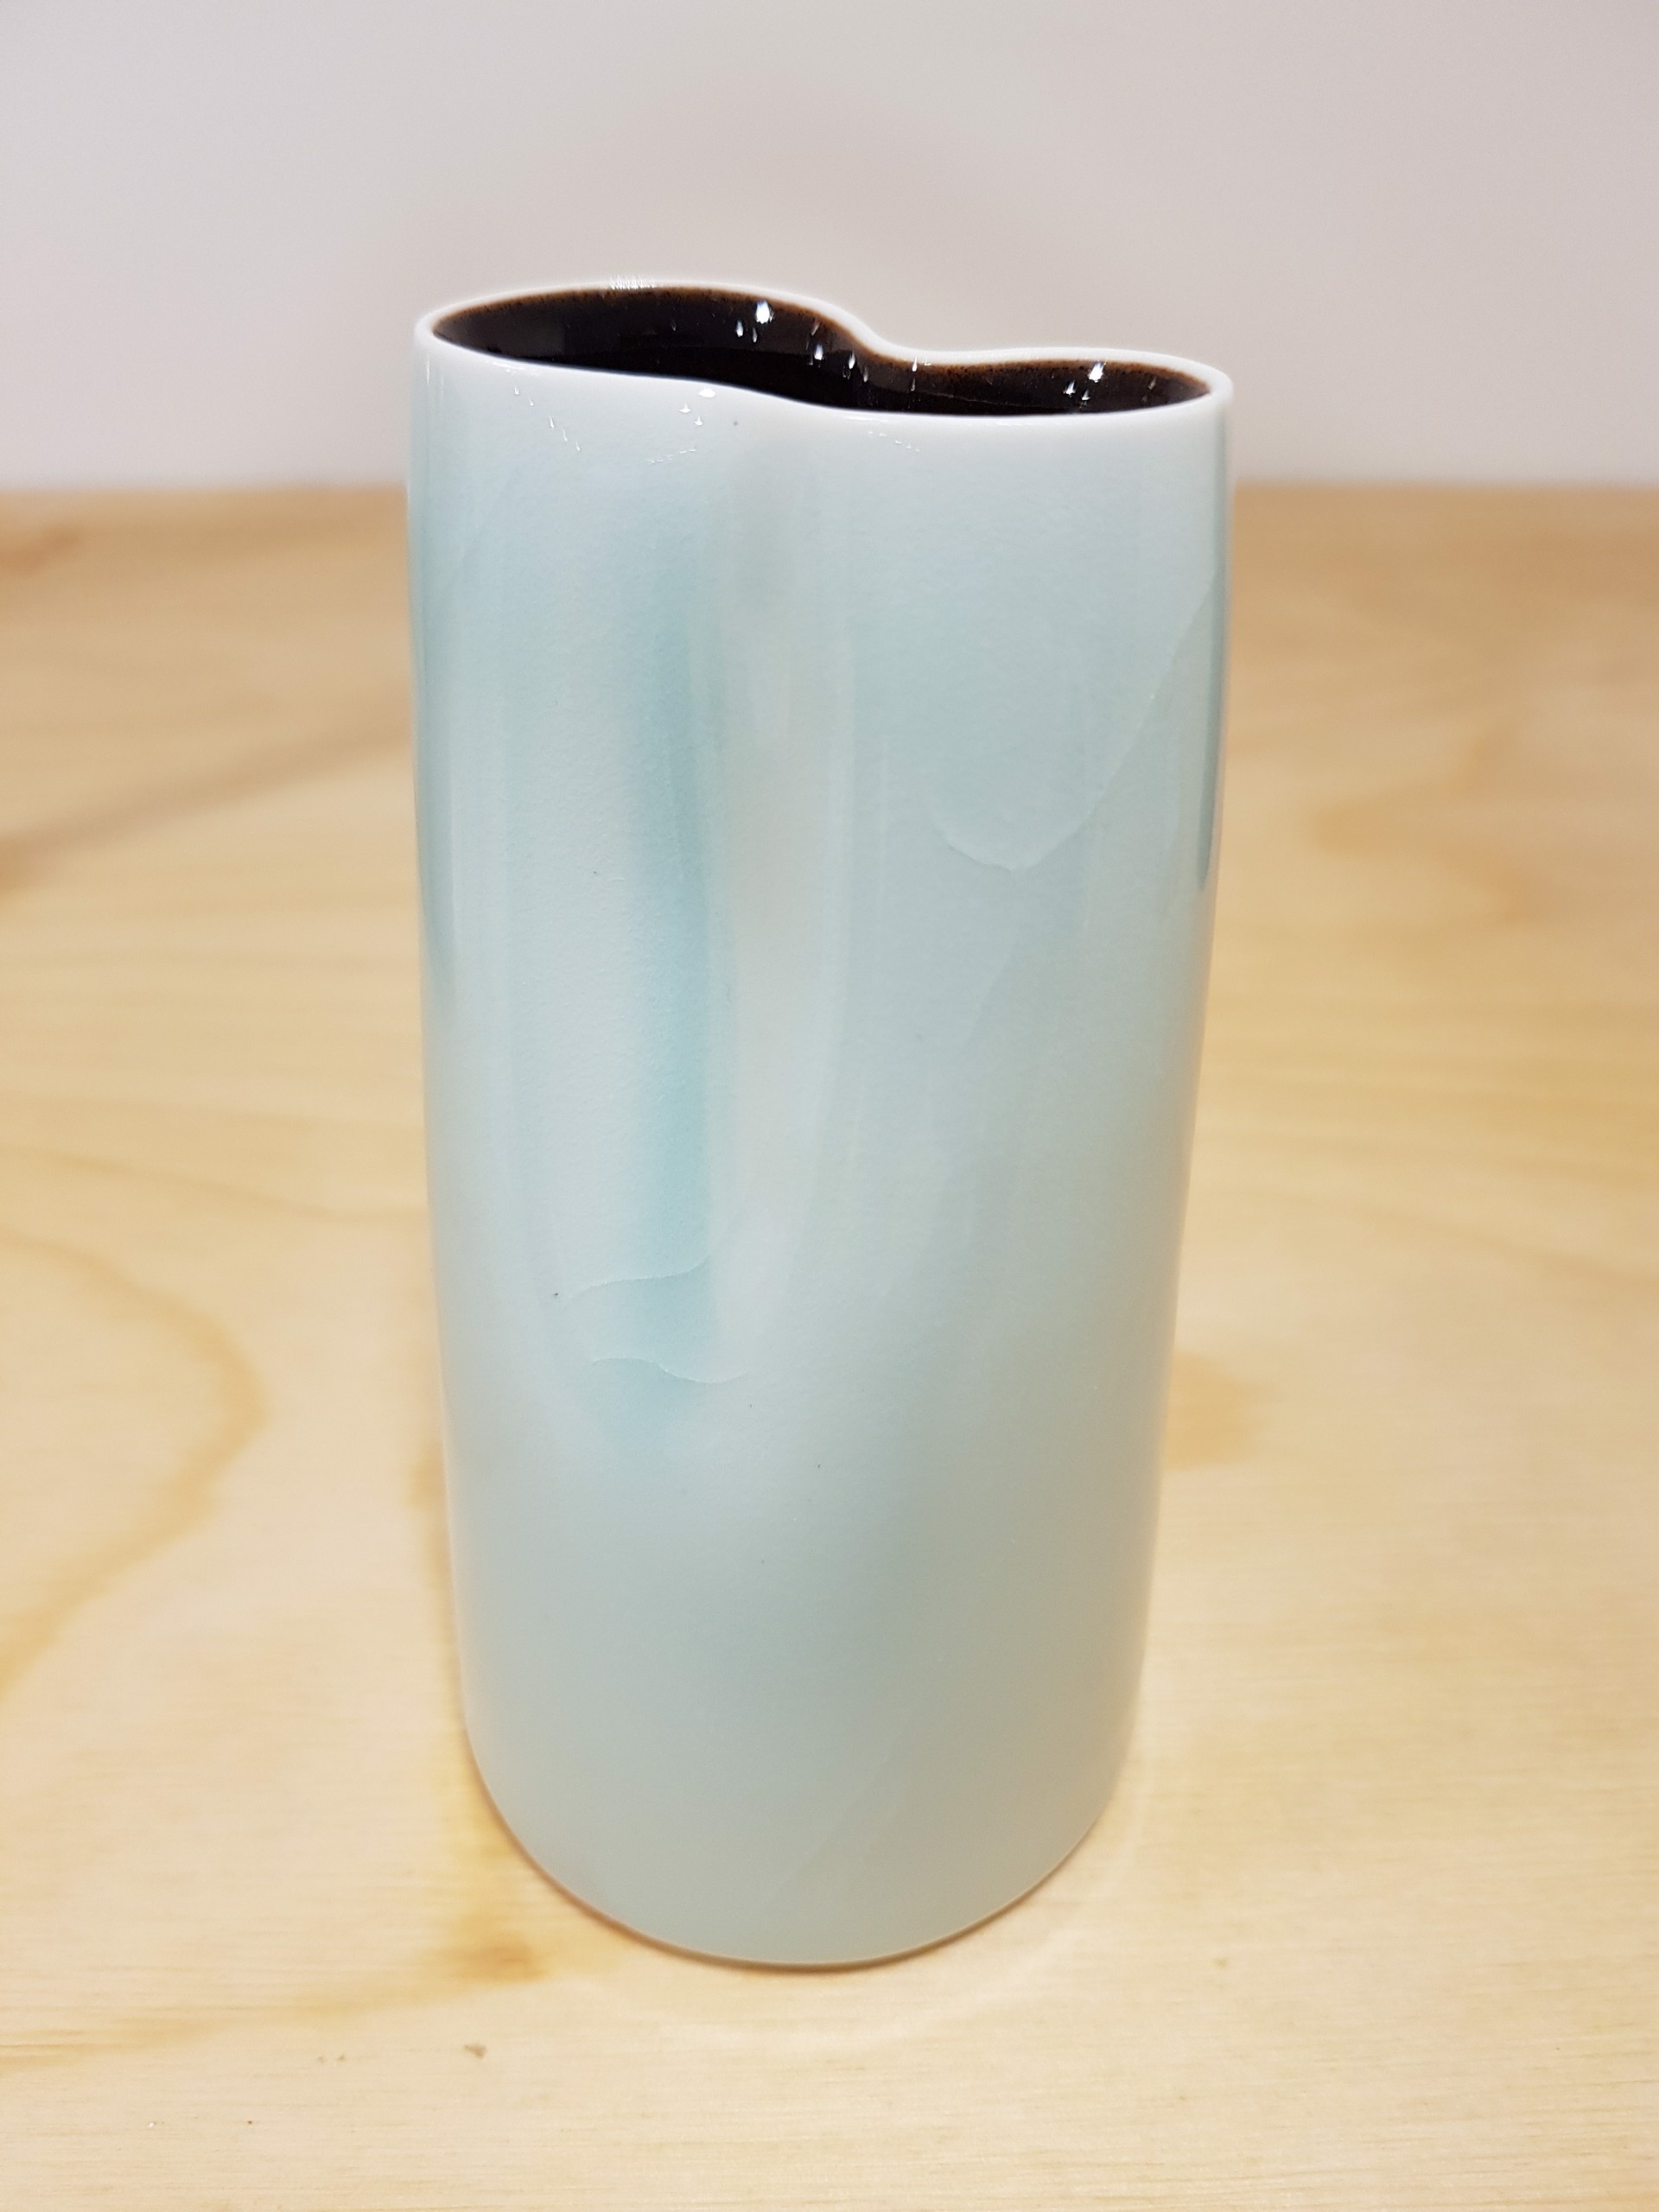 Celandon Cloud Vase by Chris Keenan